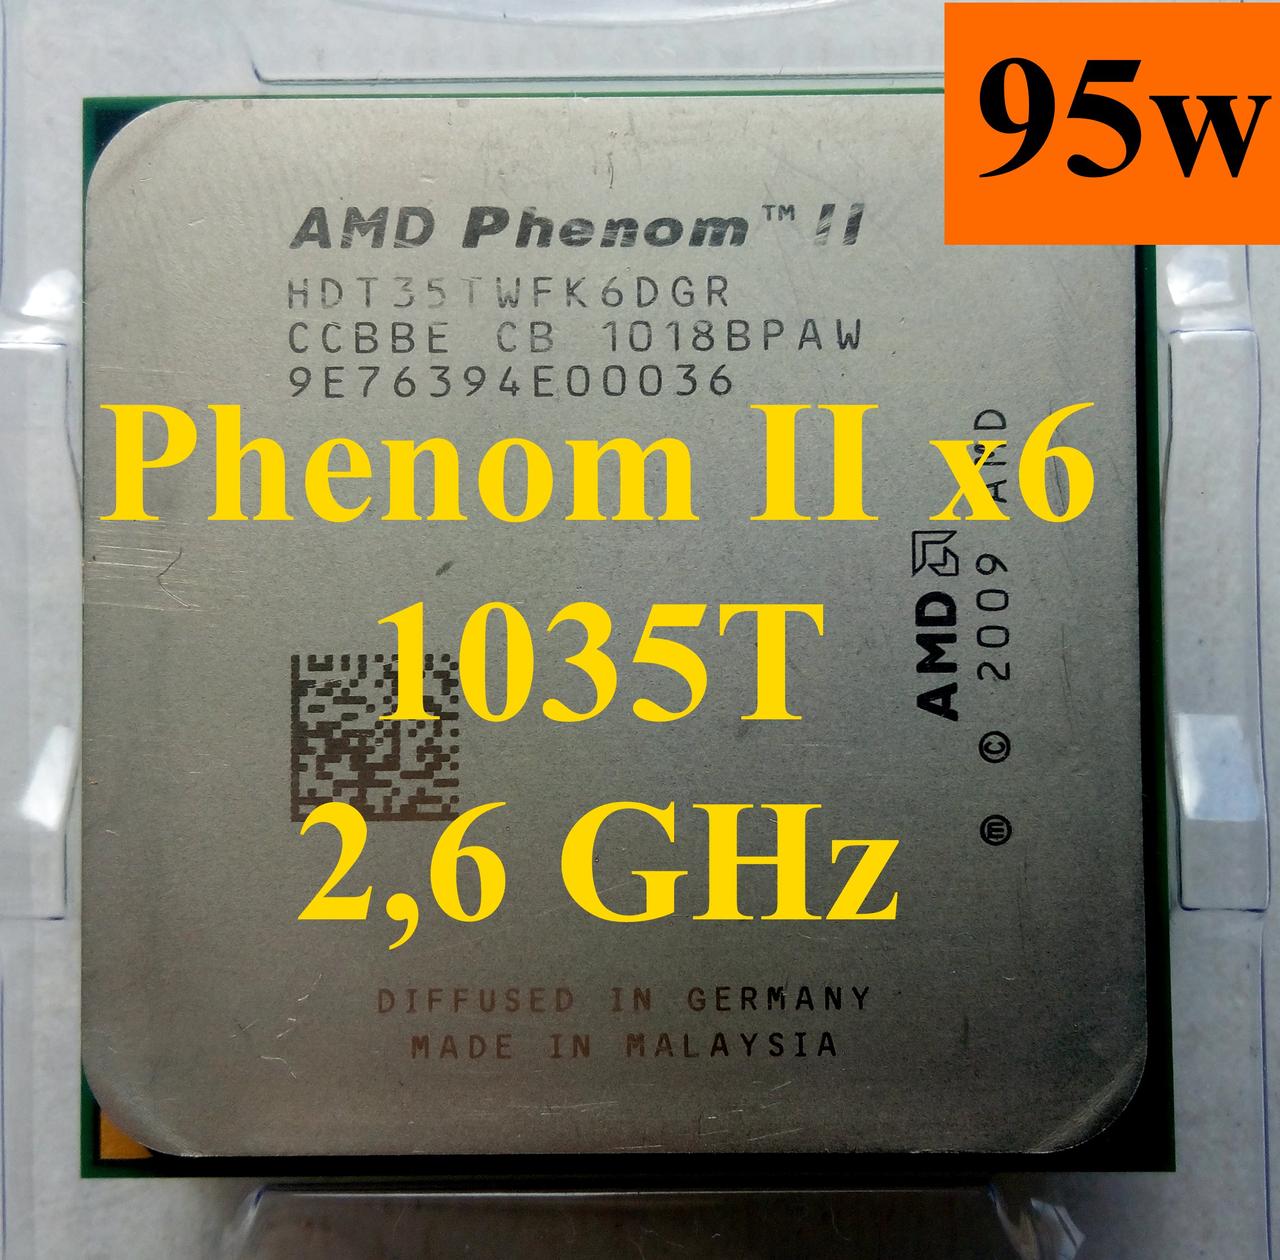 Ii x6 1035t. AMD Phenom(TM) x6 1035t Processor. Phenom II x6 1035t. AMD Phenom II x6 1055 t Thuban. AMD x6 1065t.